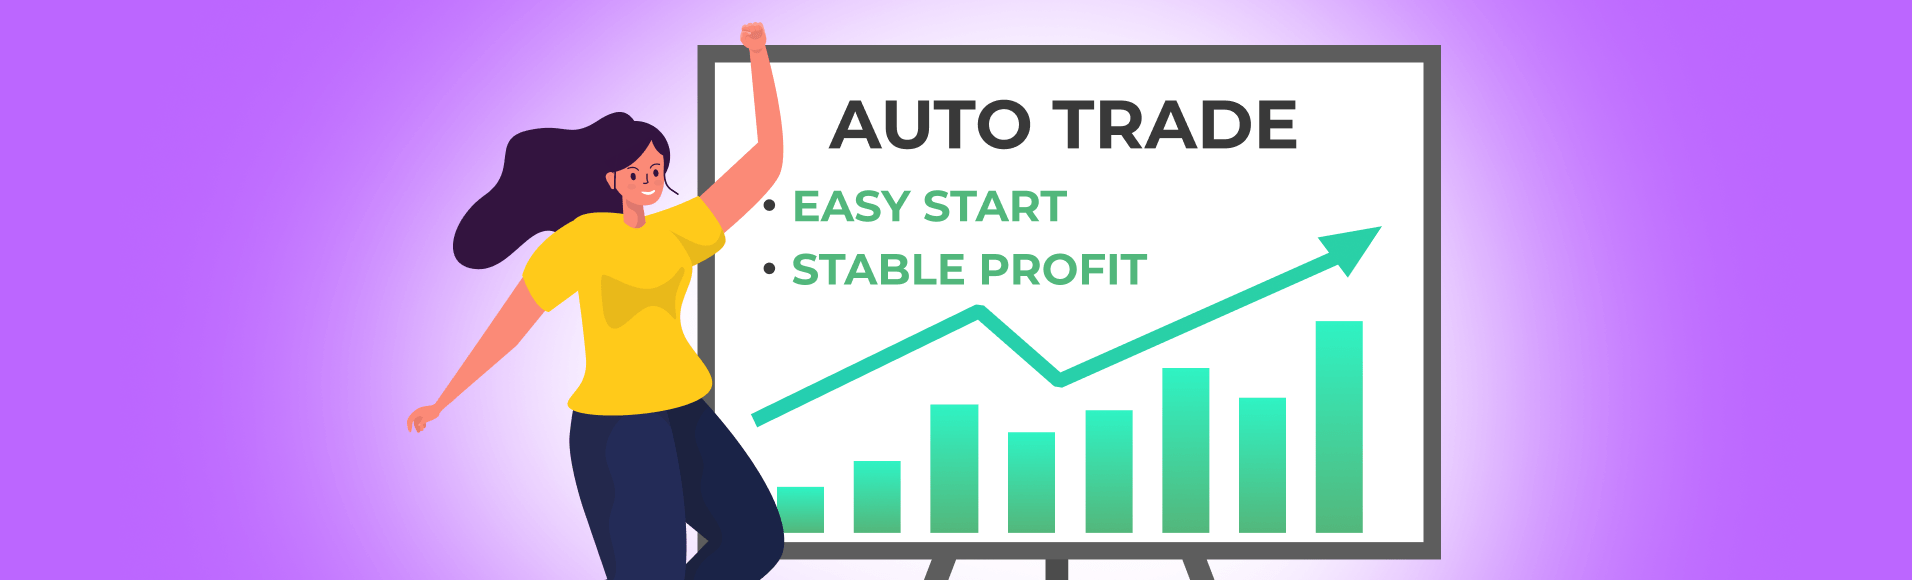 Auto trade: easy start, stable profit.